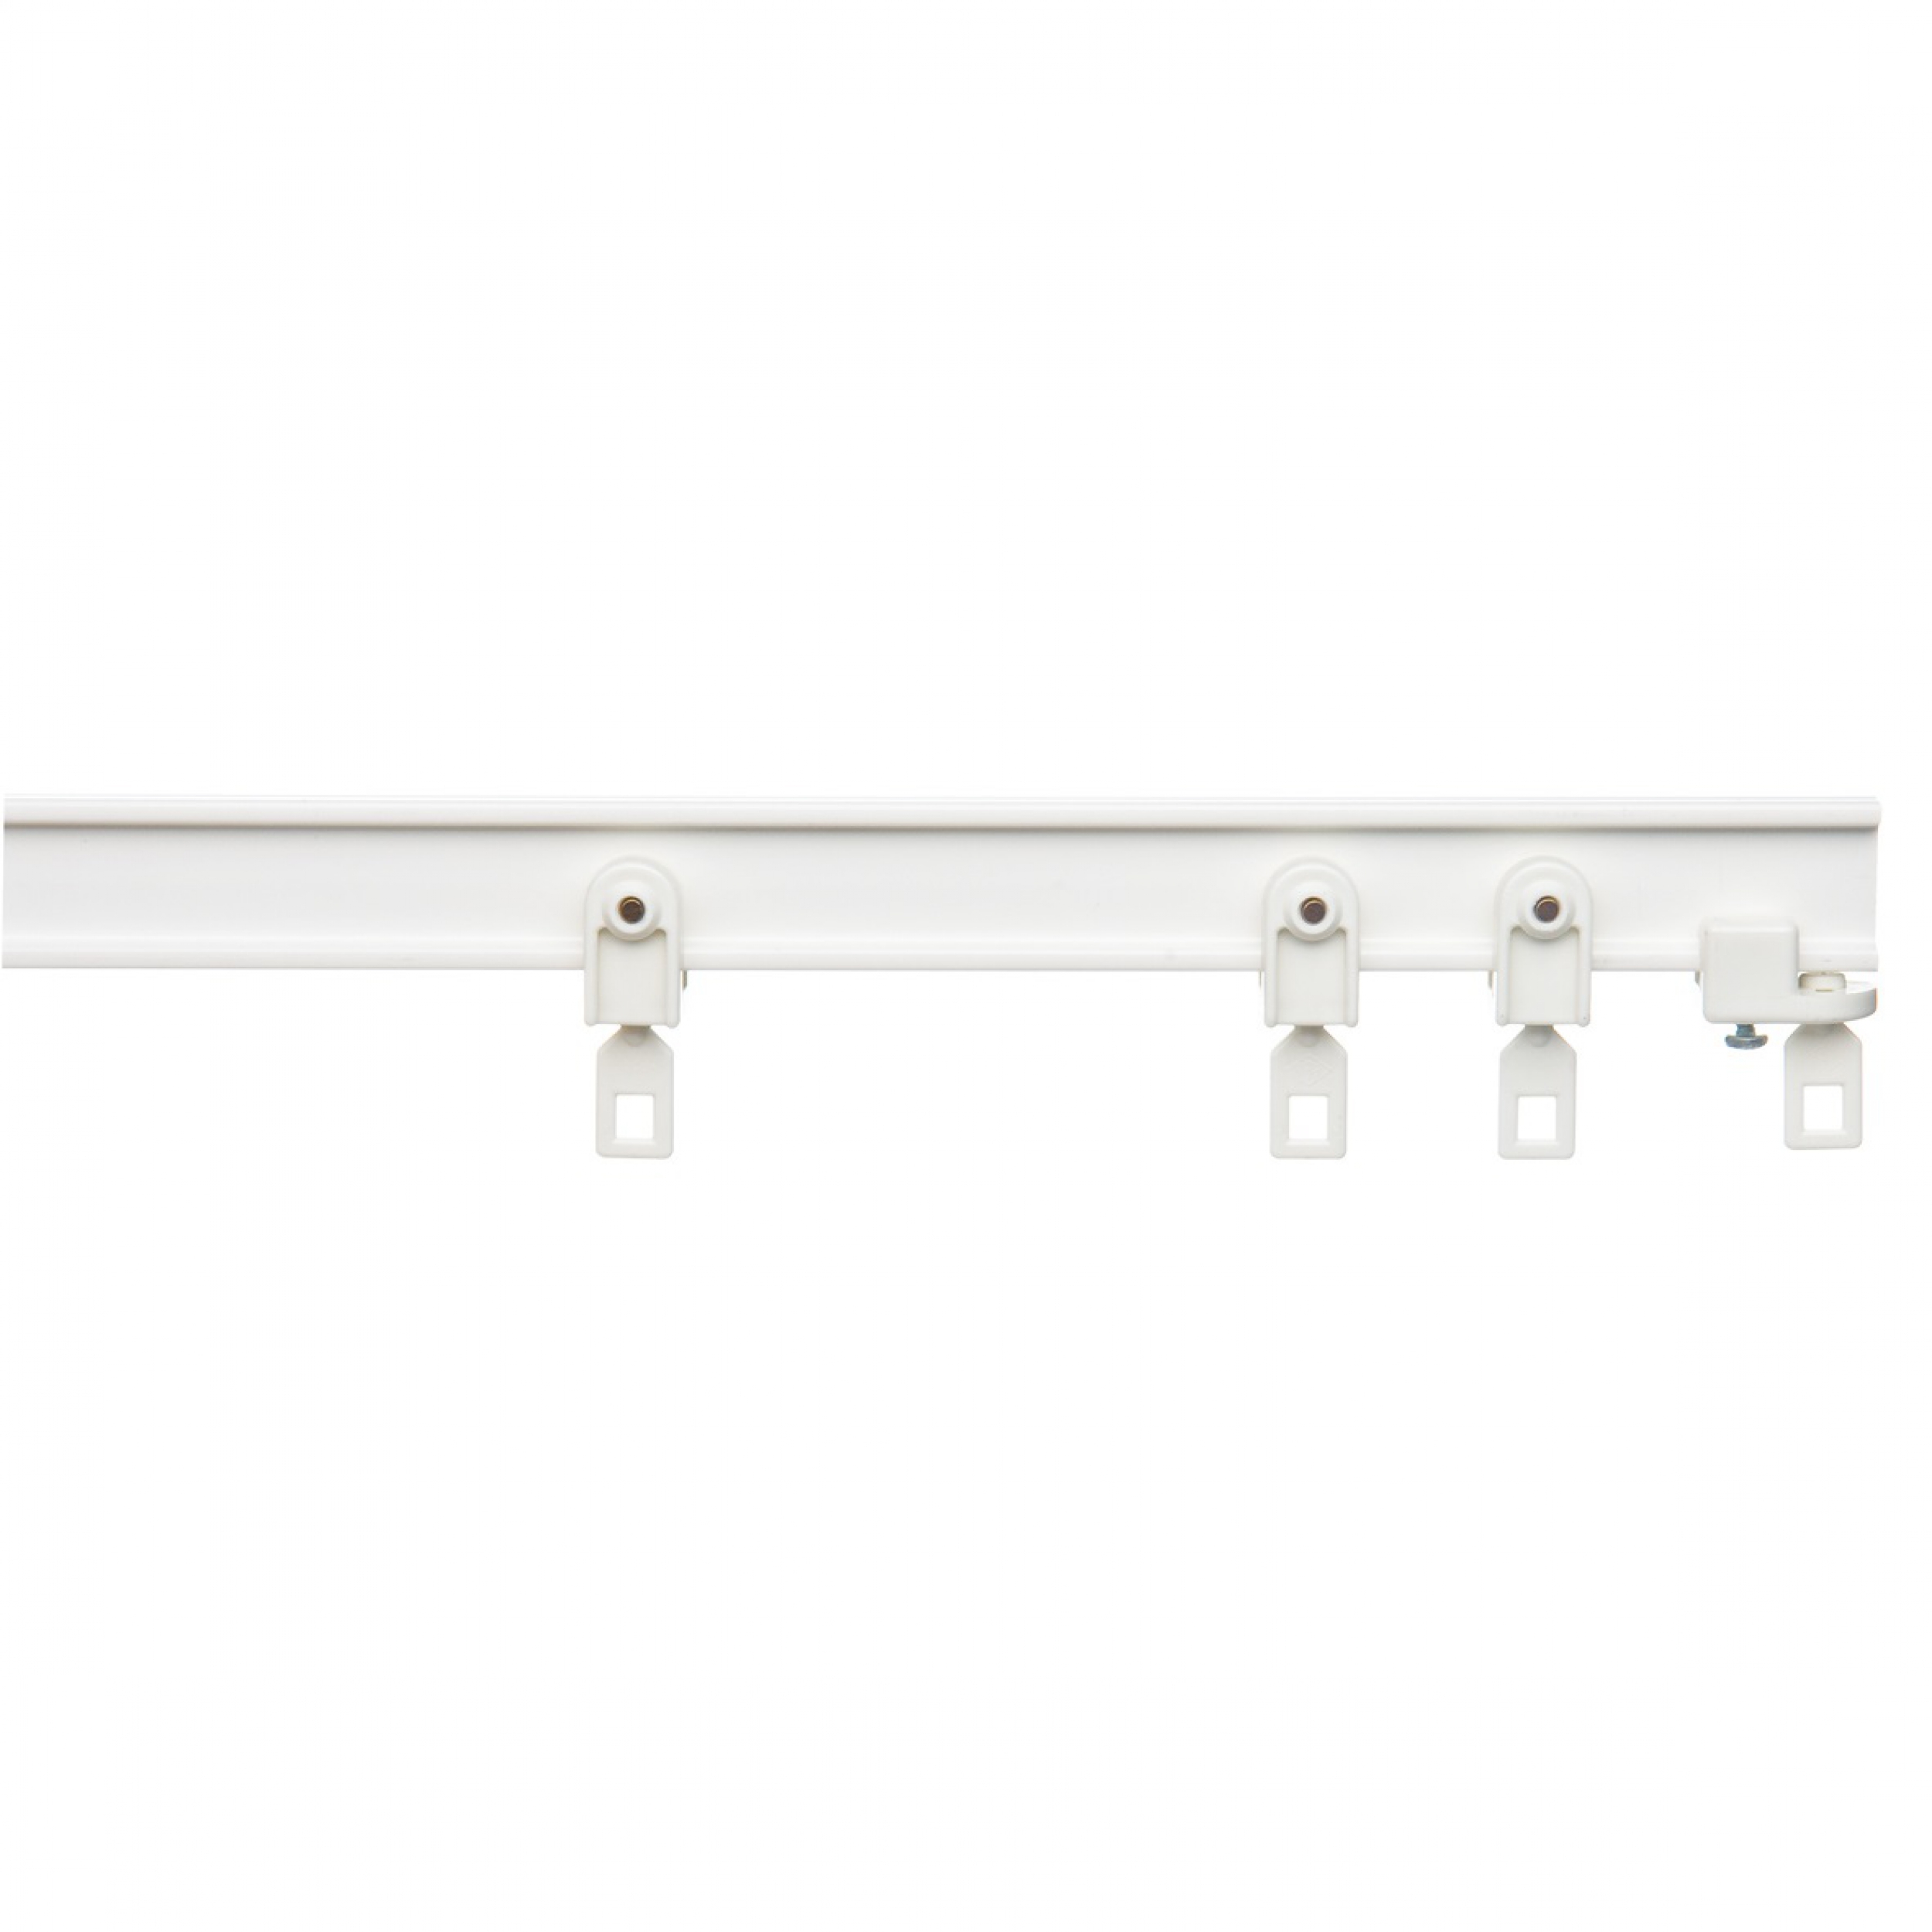 Rail rideau flexible Blanc - Au mètre